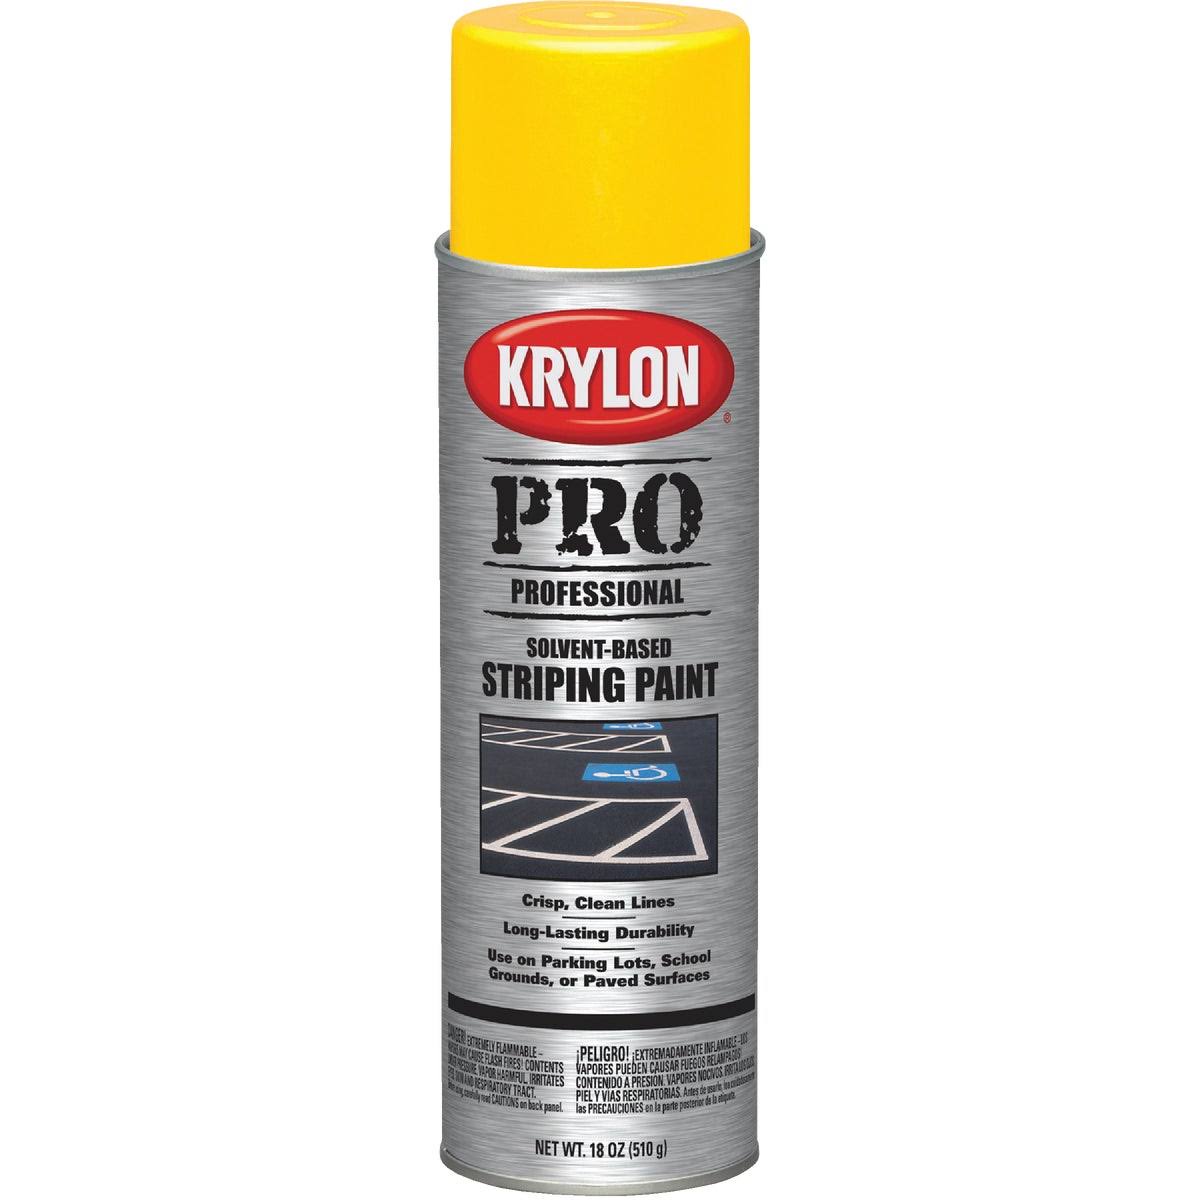 Krylon Professional Solvent Based Striping Paint - 15oz